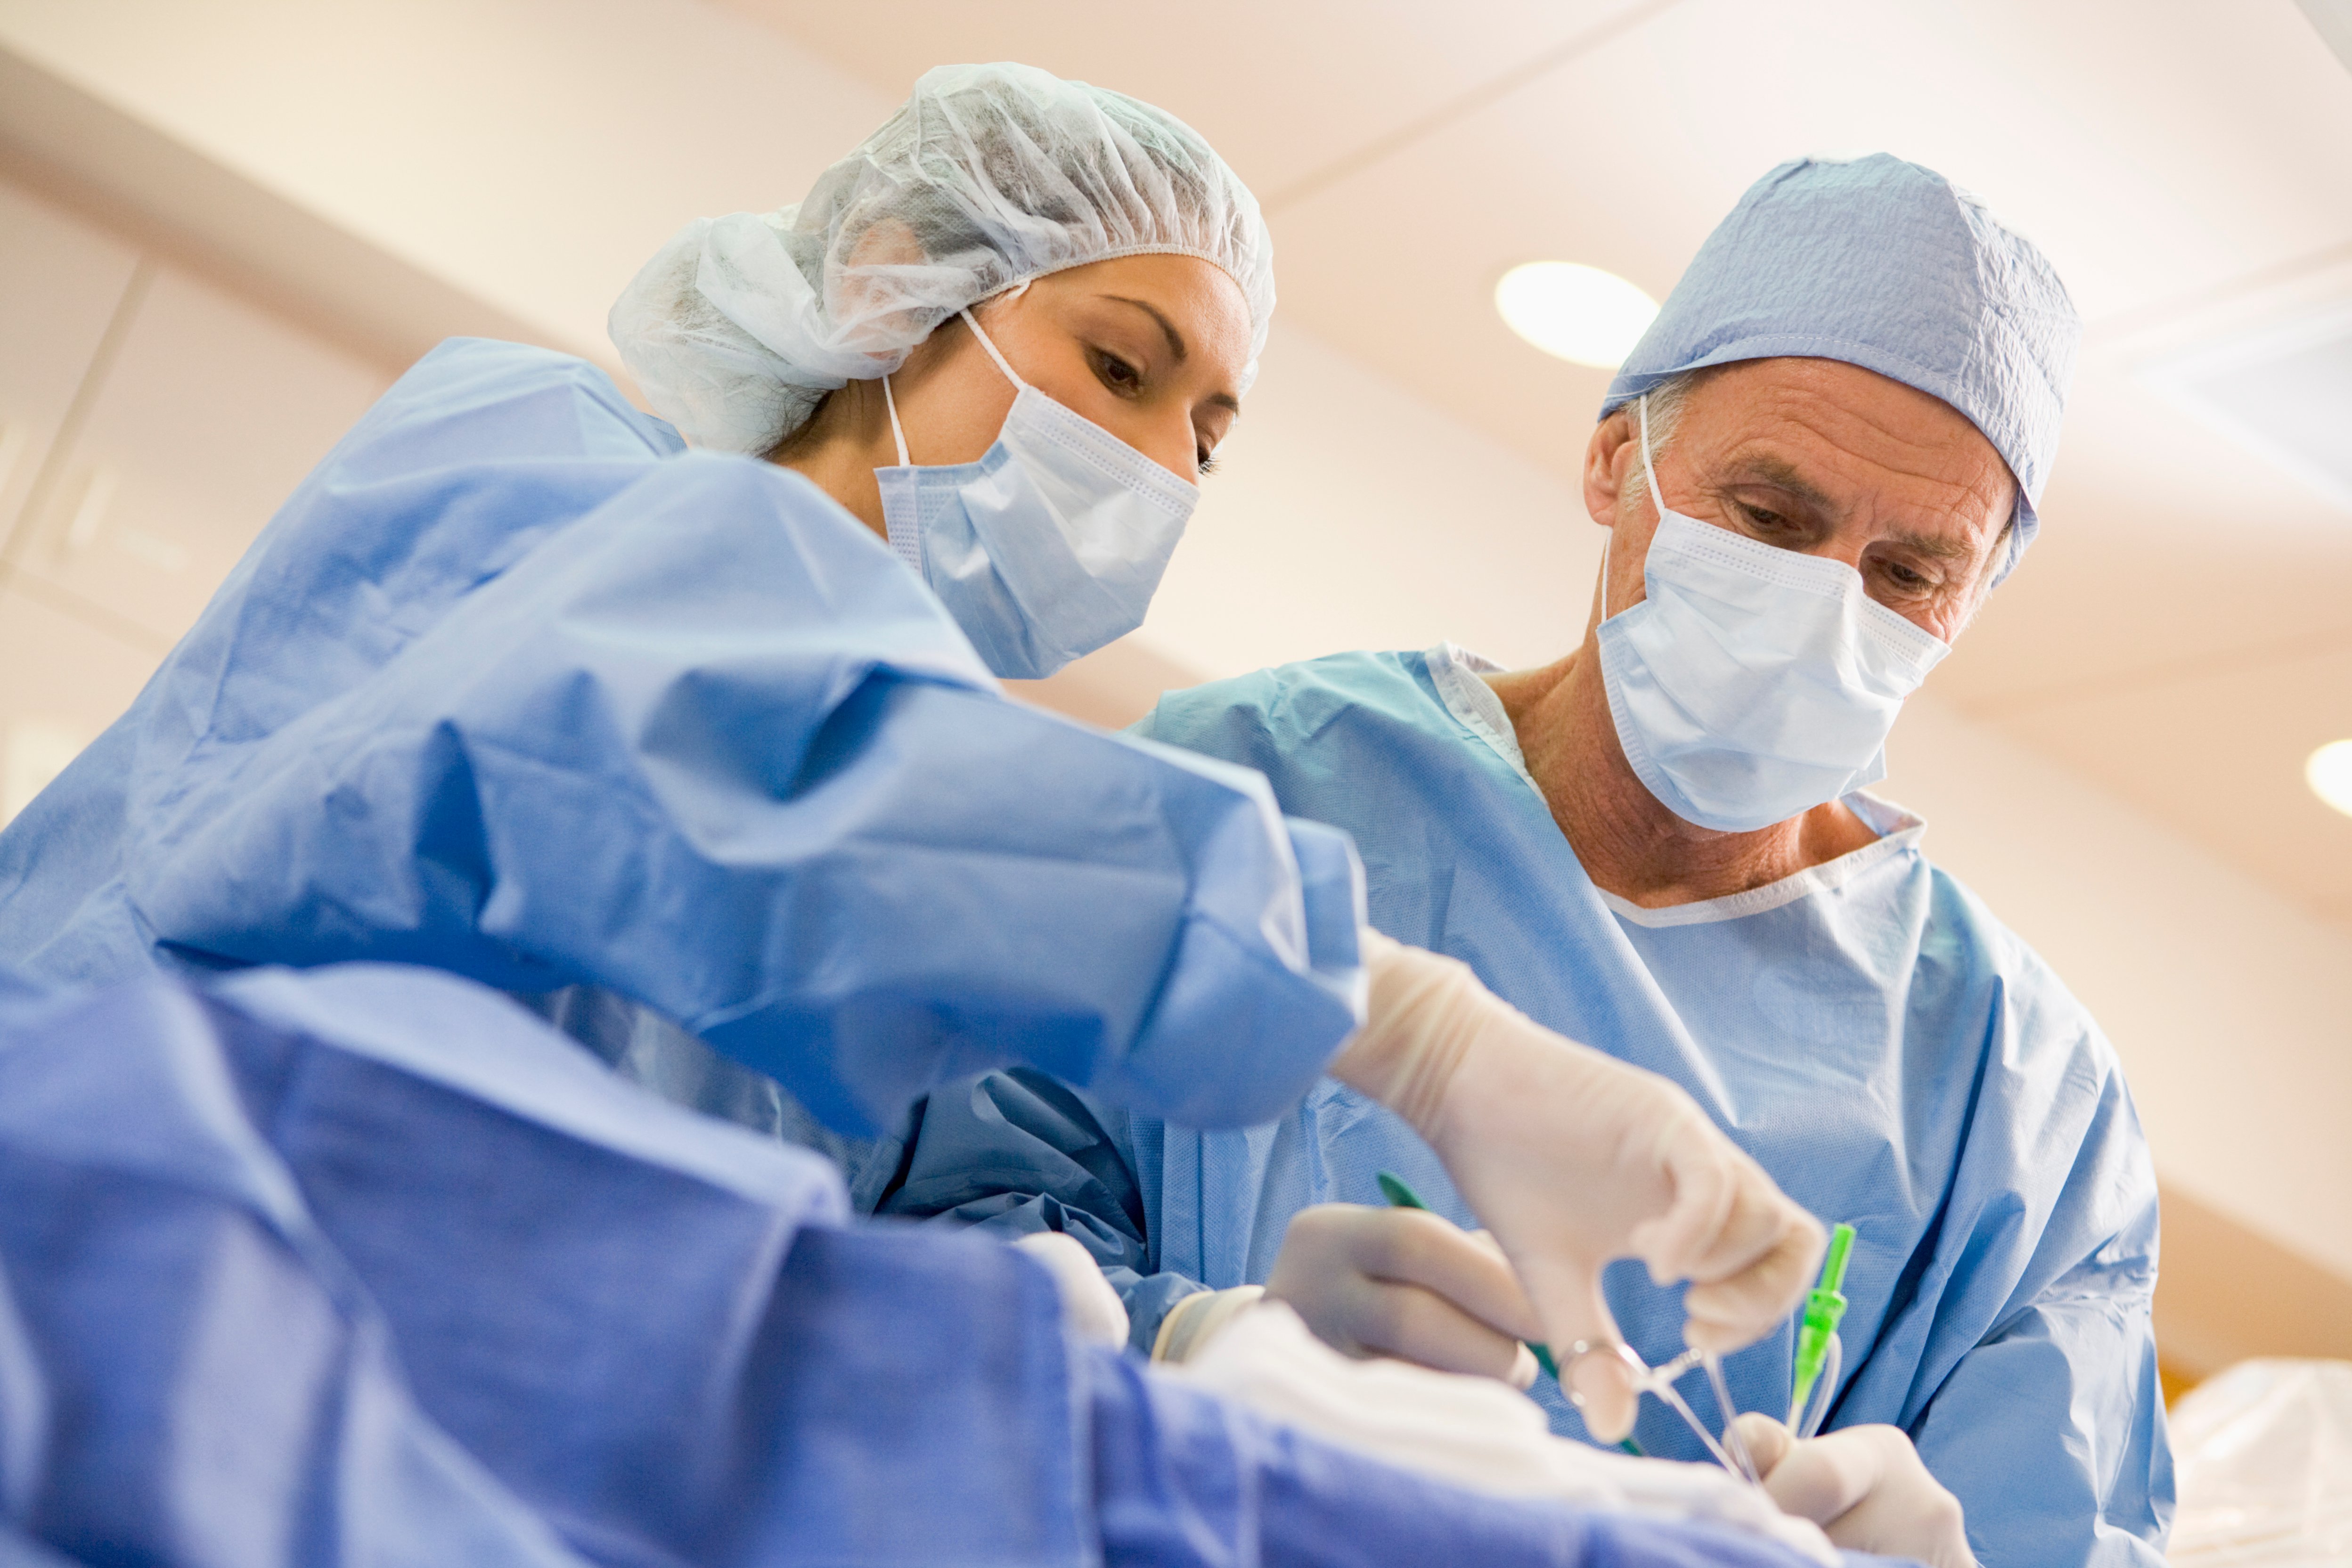 2172584-surgeons-operating-on-patient.jpg